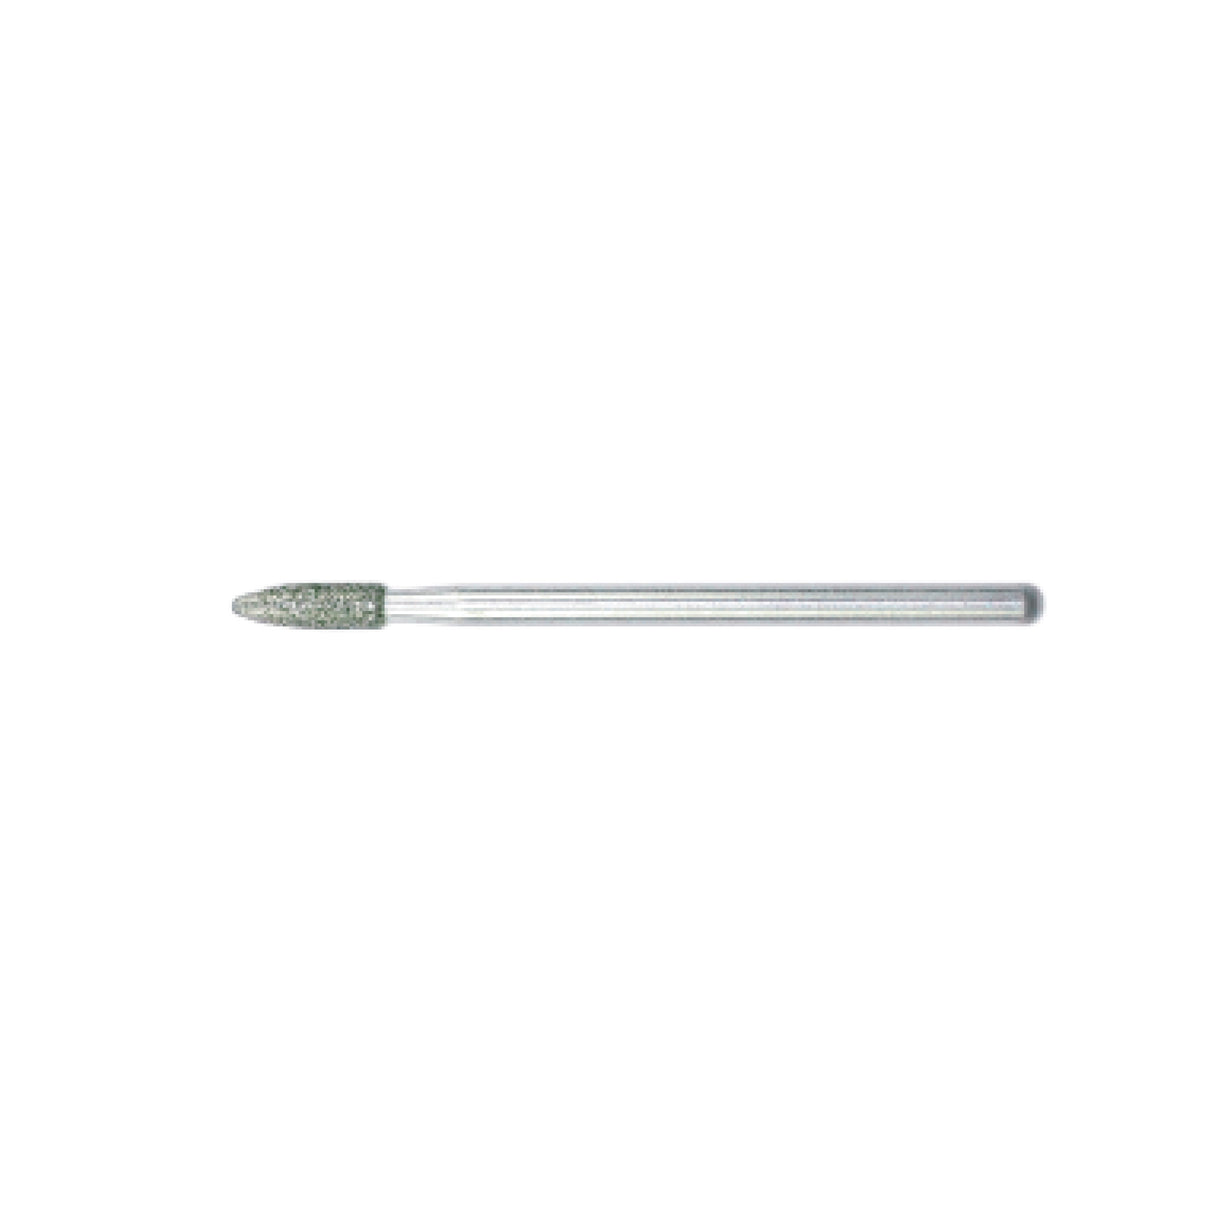 Diamond milling cutter, medium coarse - spica U/min 45.000, length 8mm, Ø2.6mm